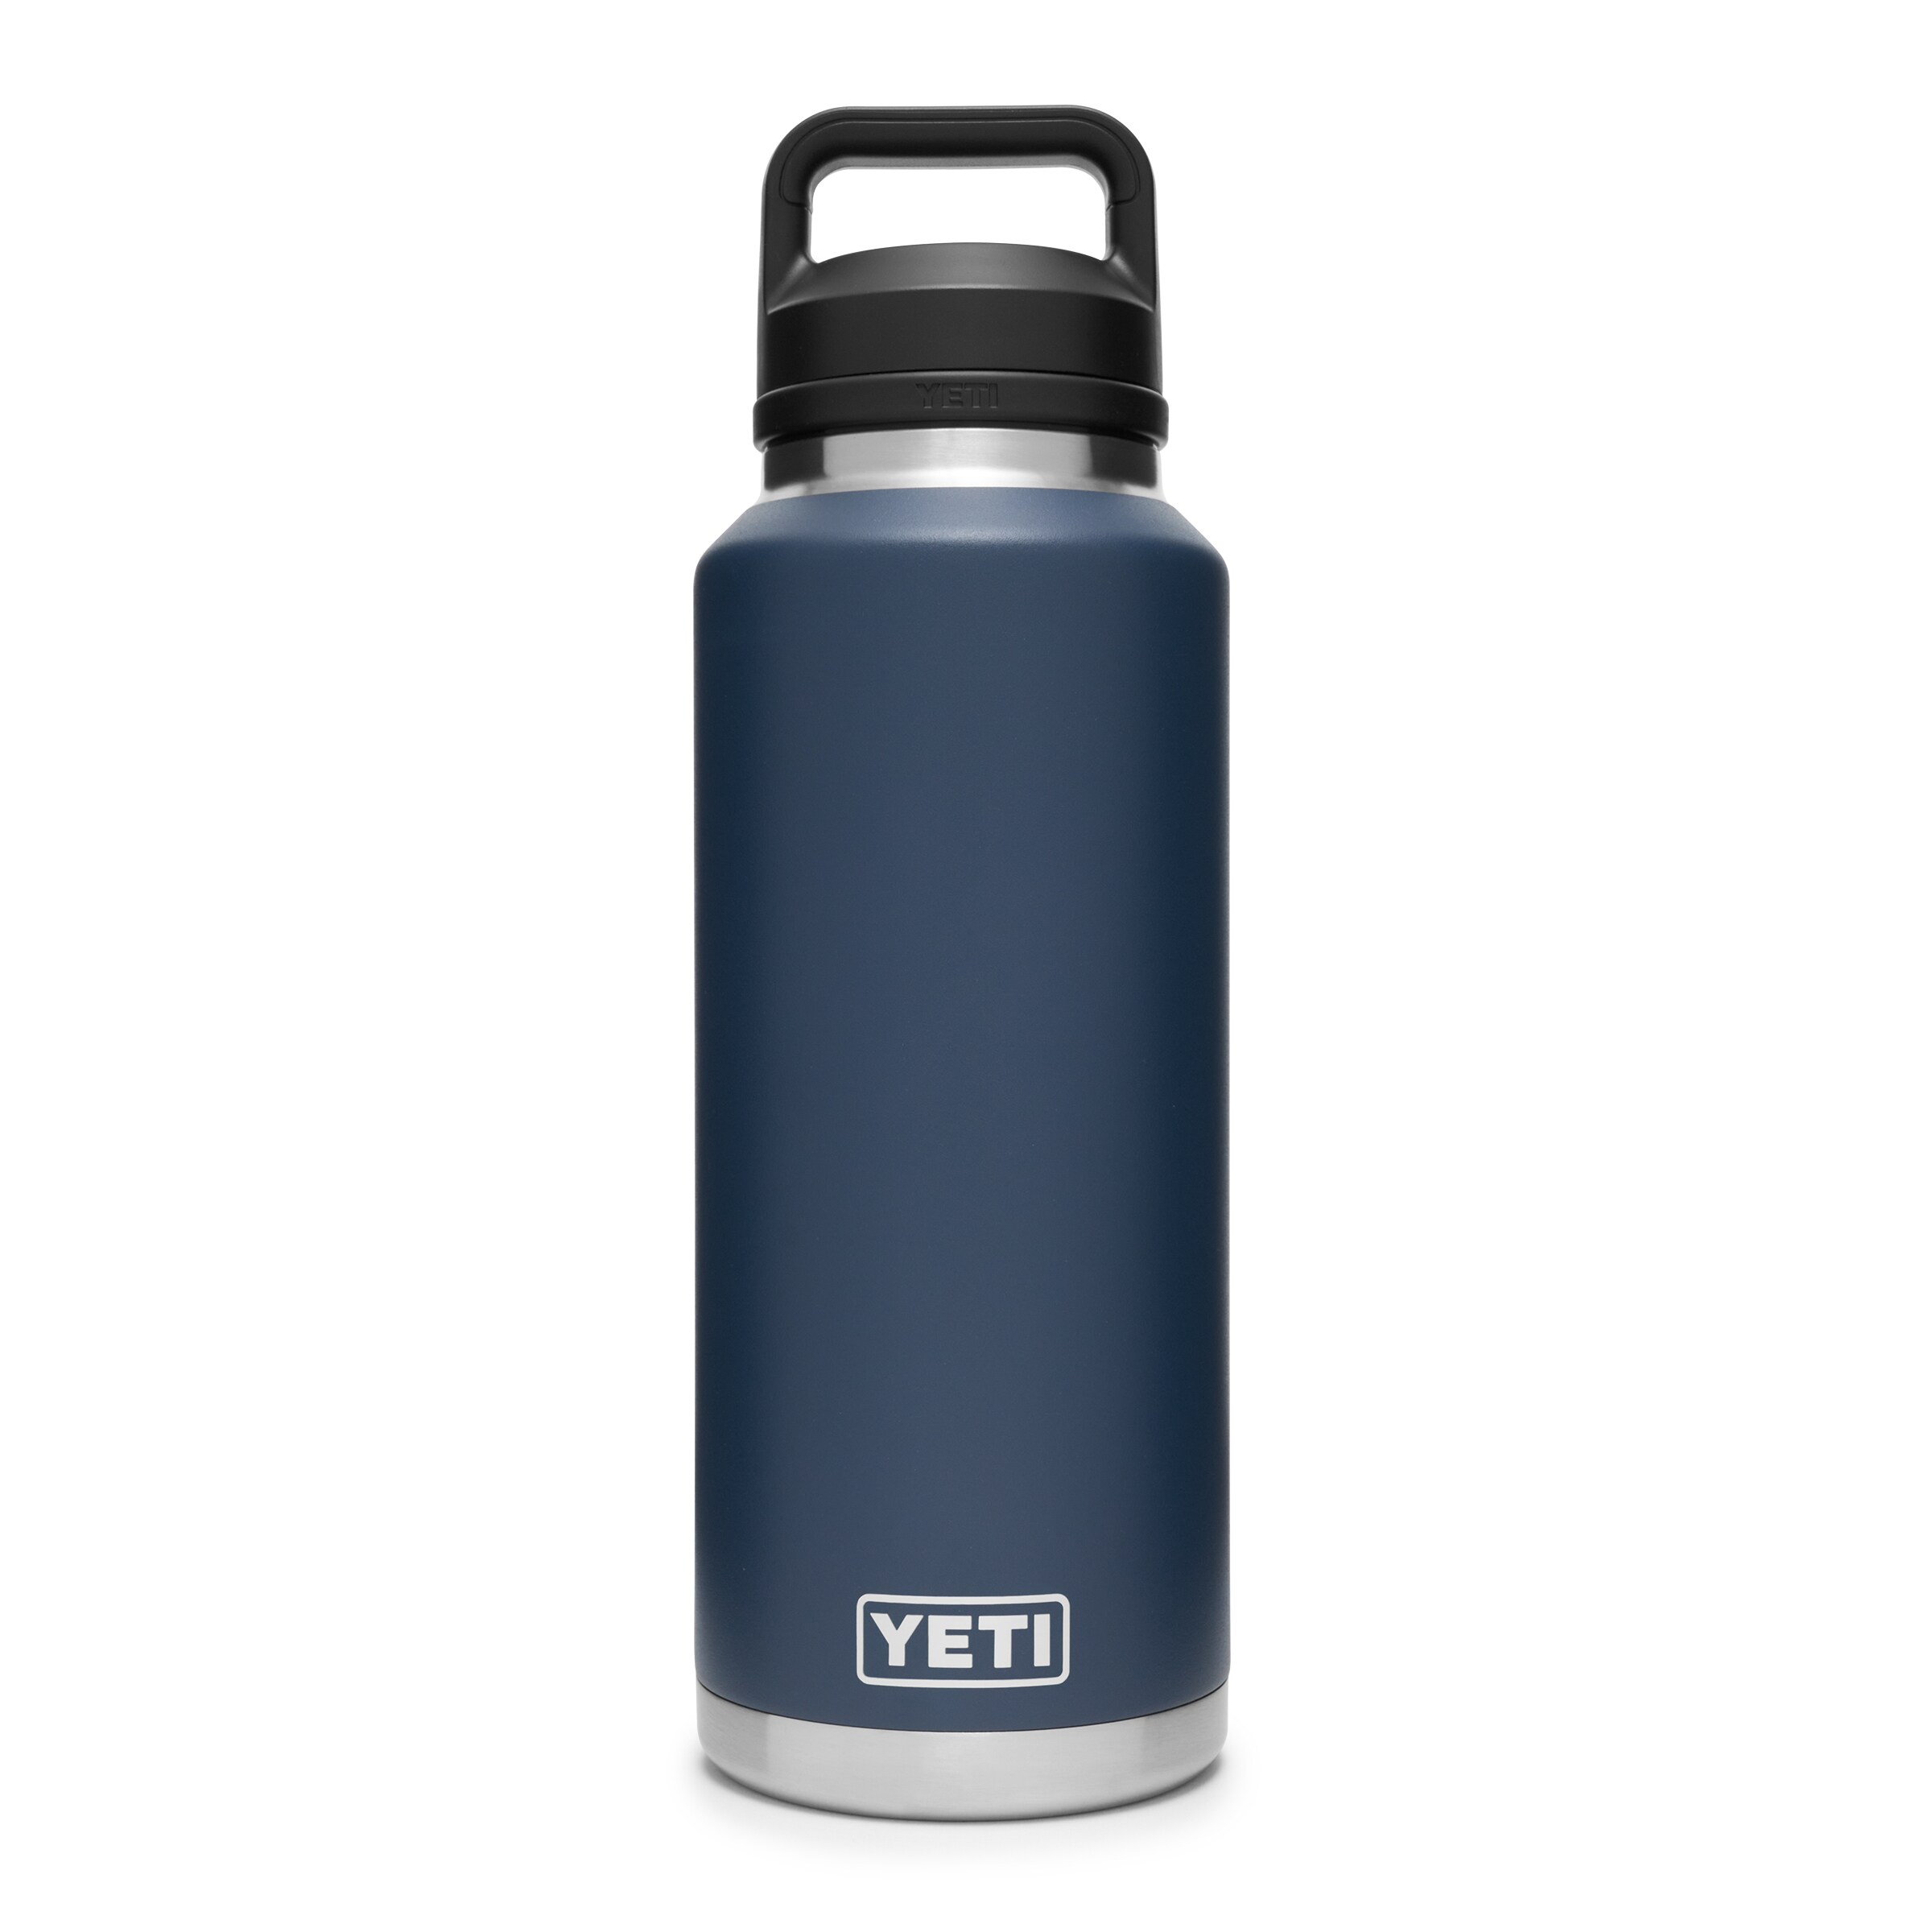 Used YETI 46 OZ DBL WALLED Water Bottles Water Bottles